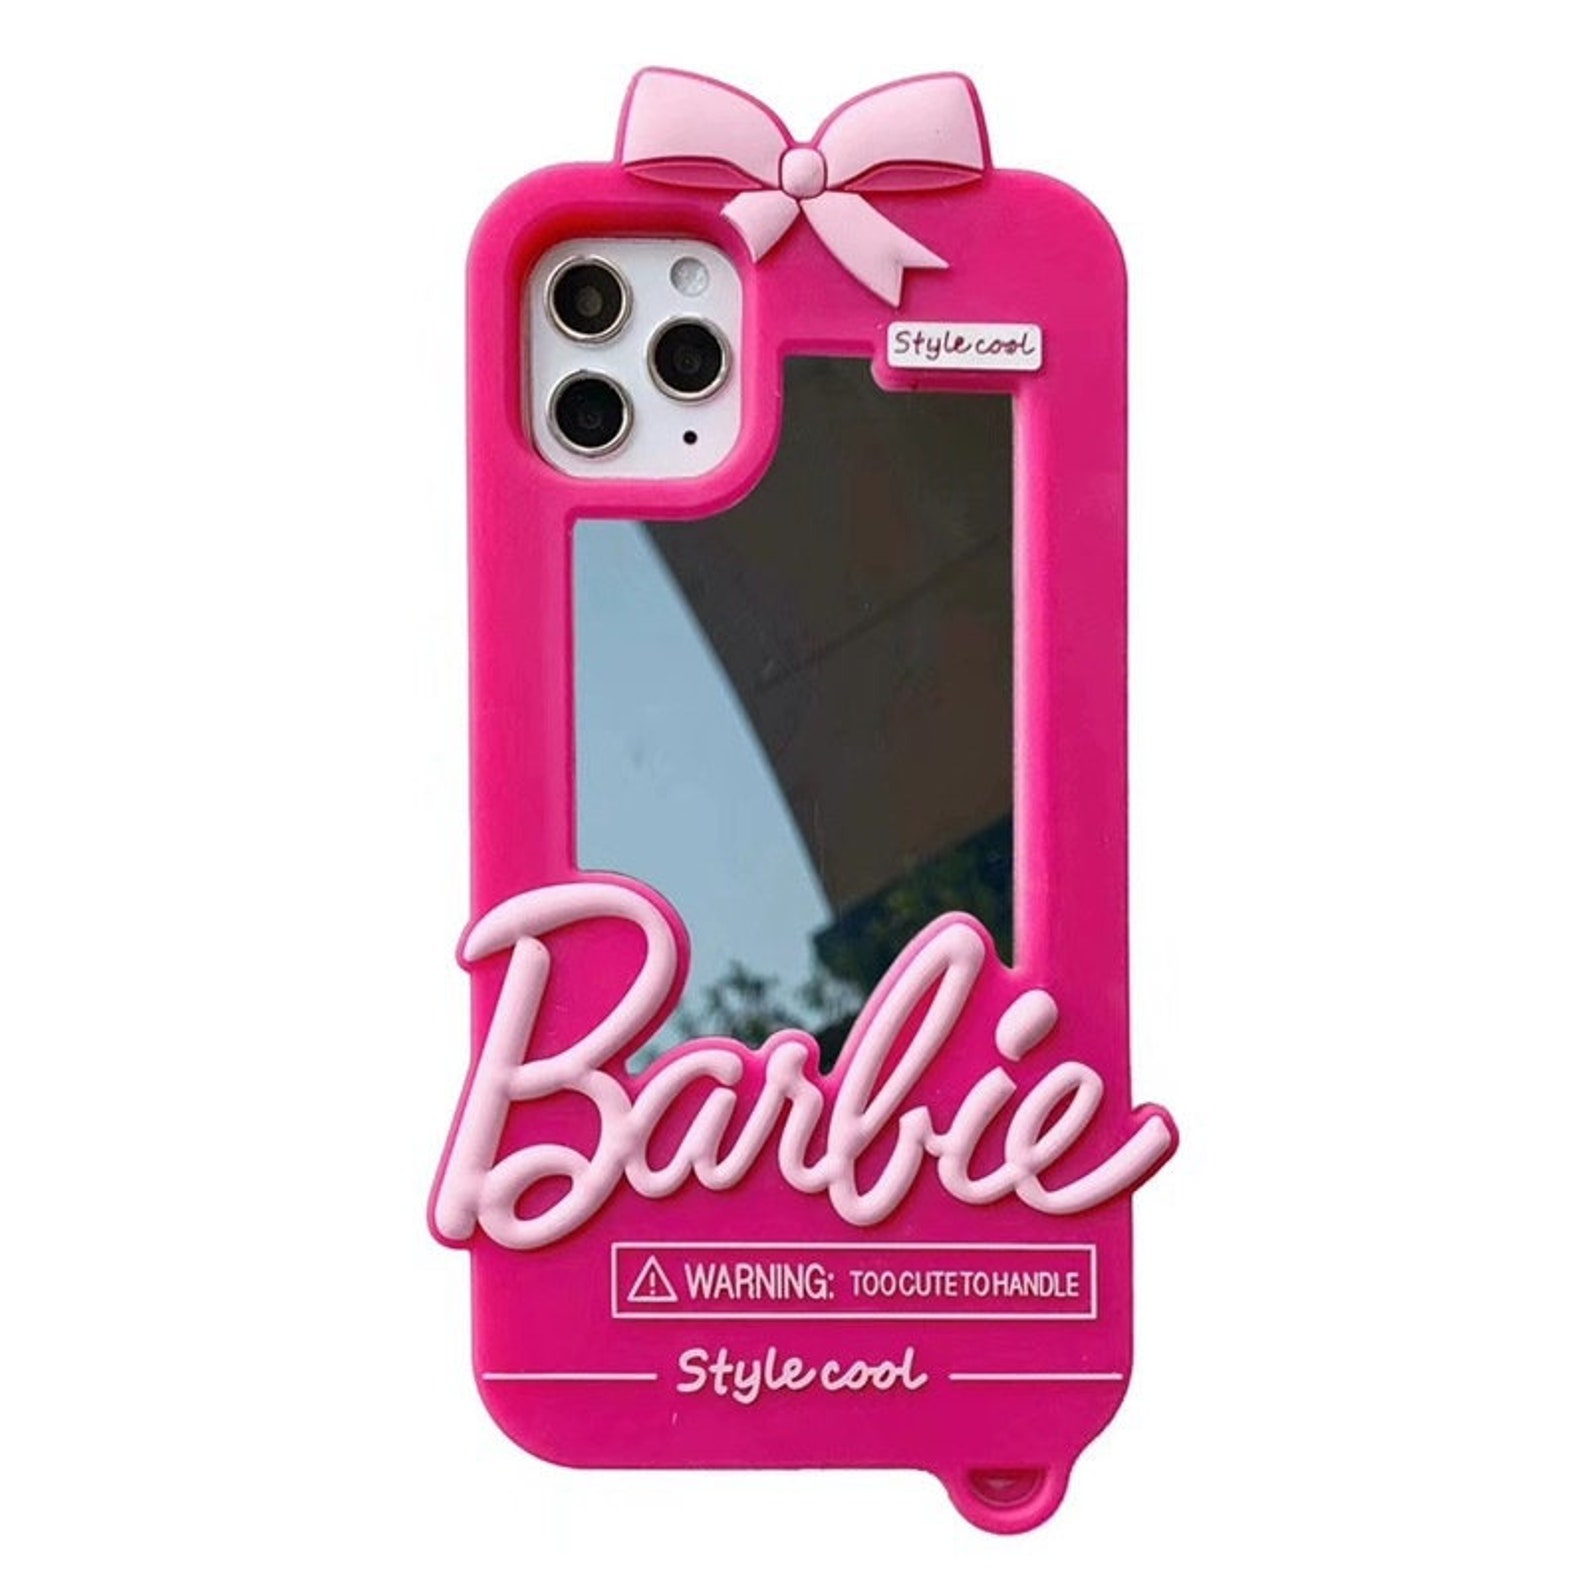 Barbie bow Iphone phone case | Etsy